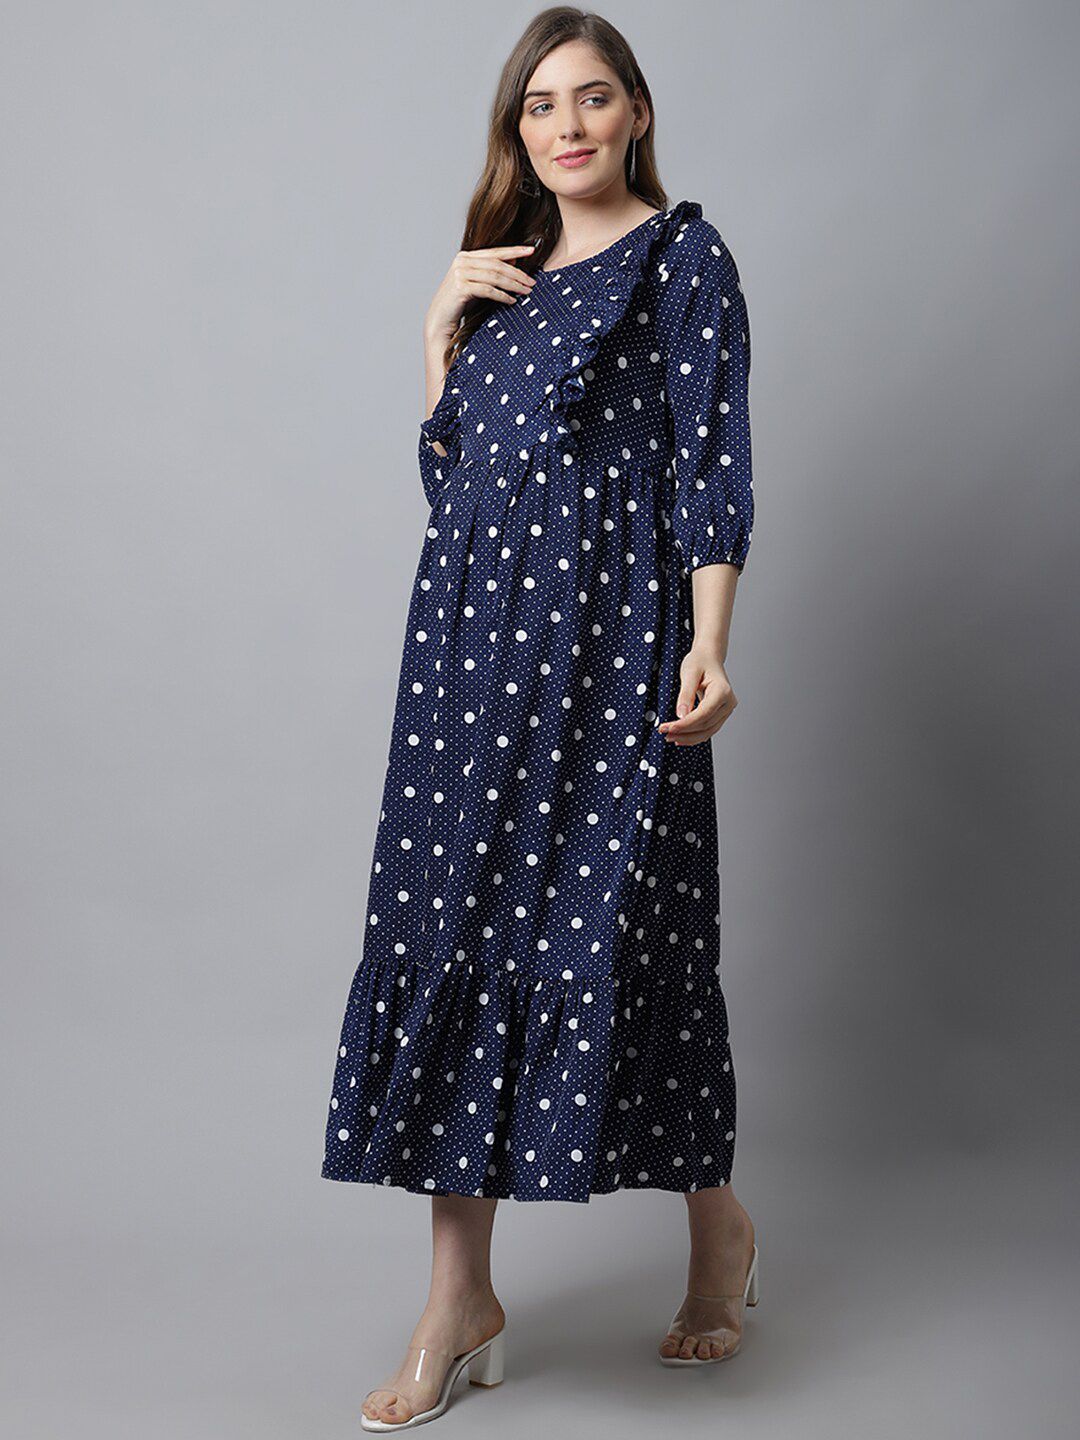 Frempy Women Navy Blue Crepe Polka Dot Printed Maternity Midi Dress Price in India